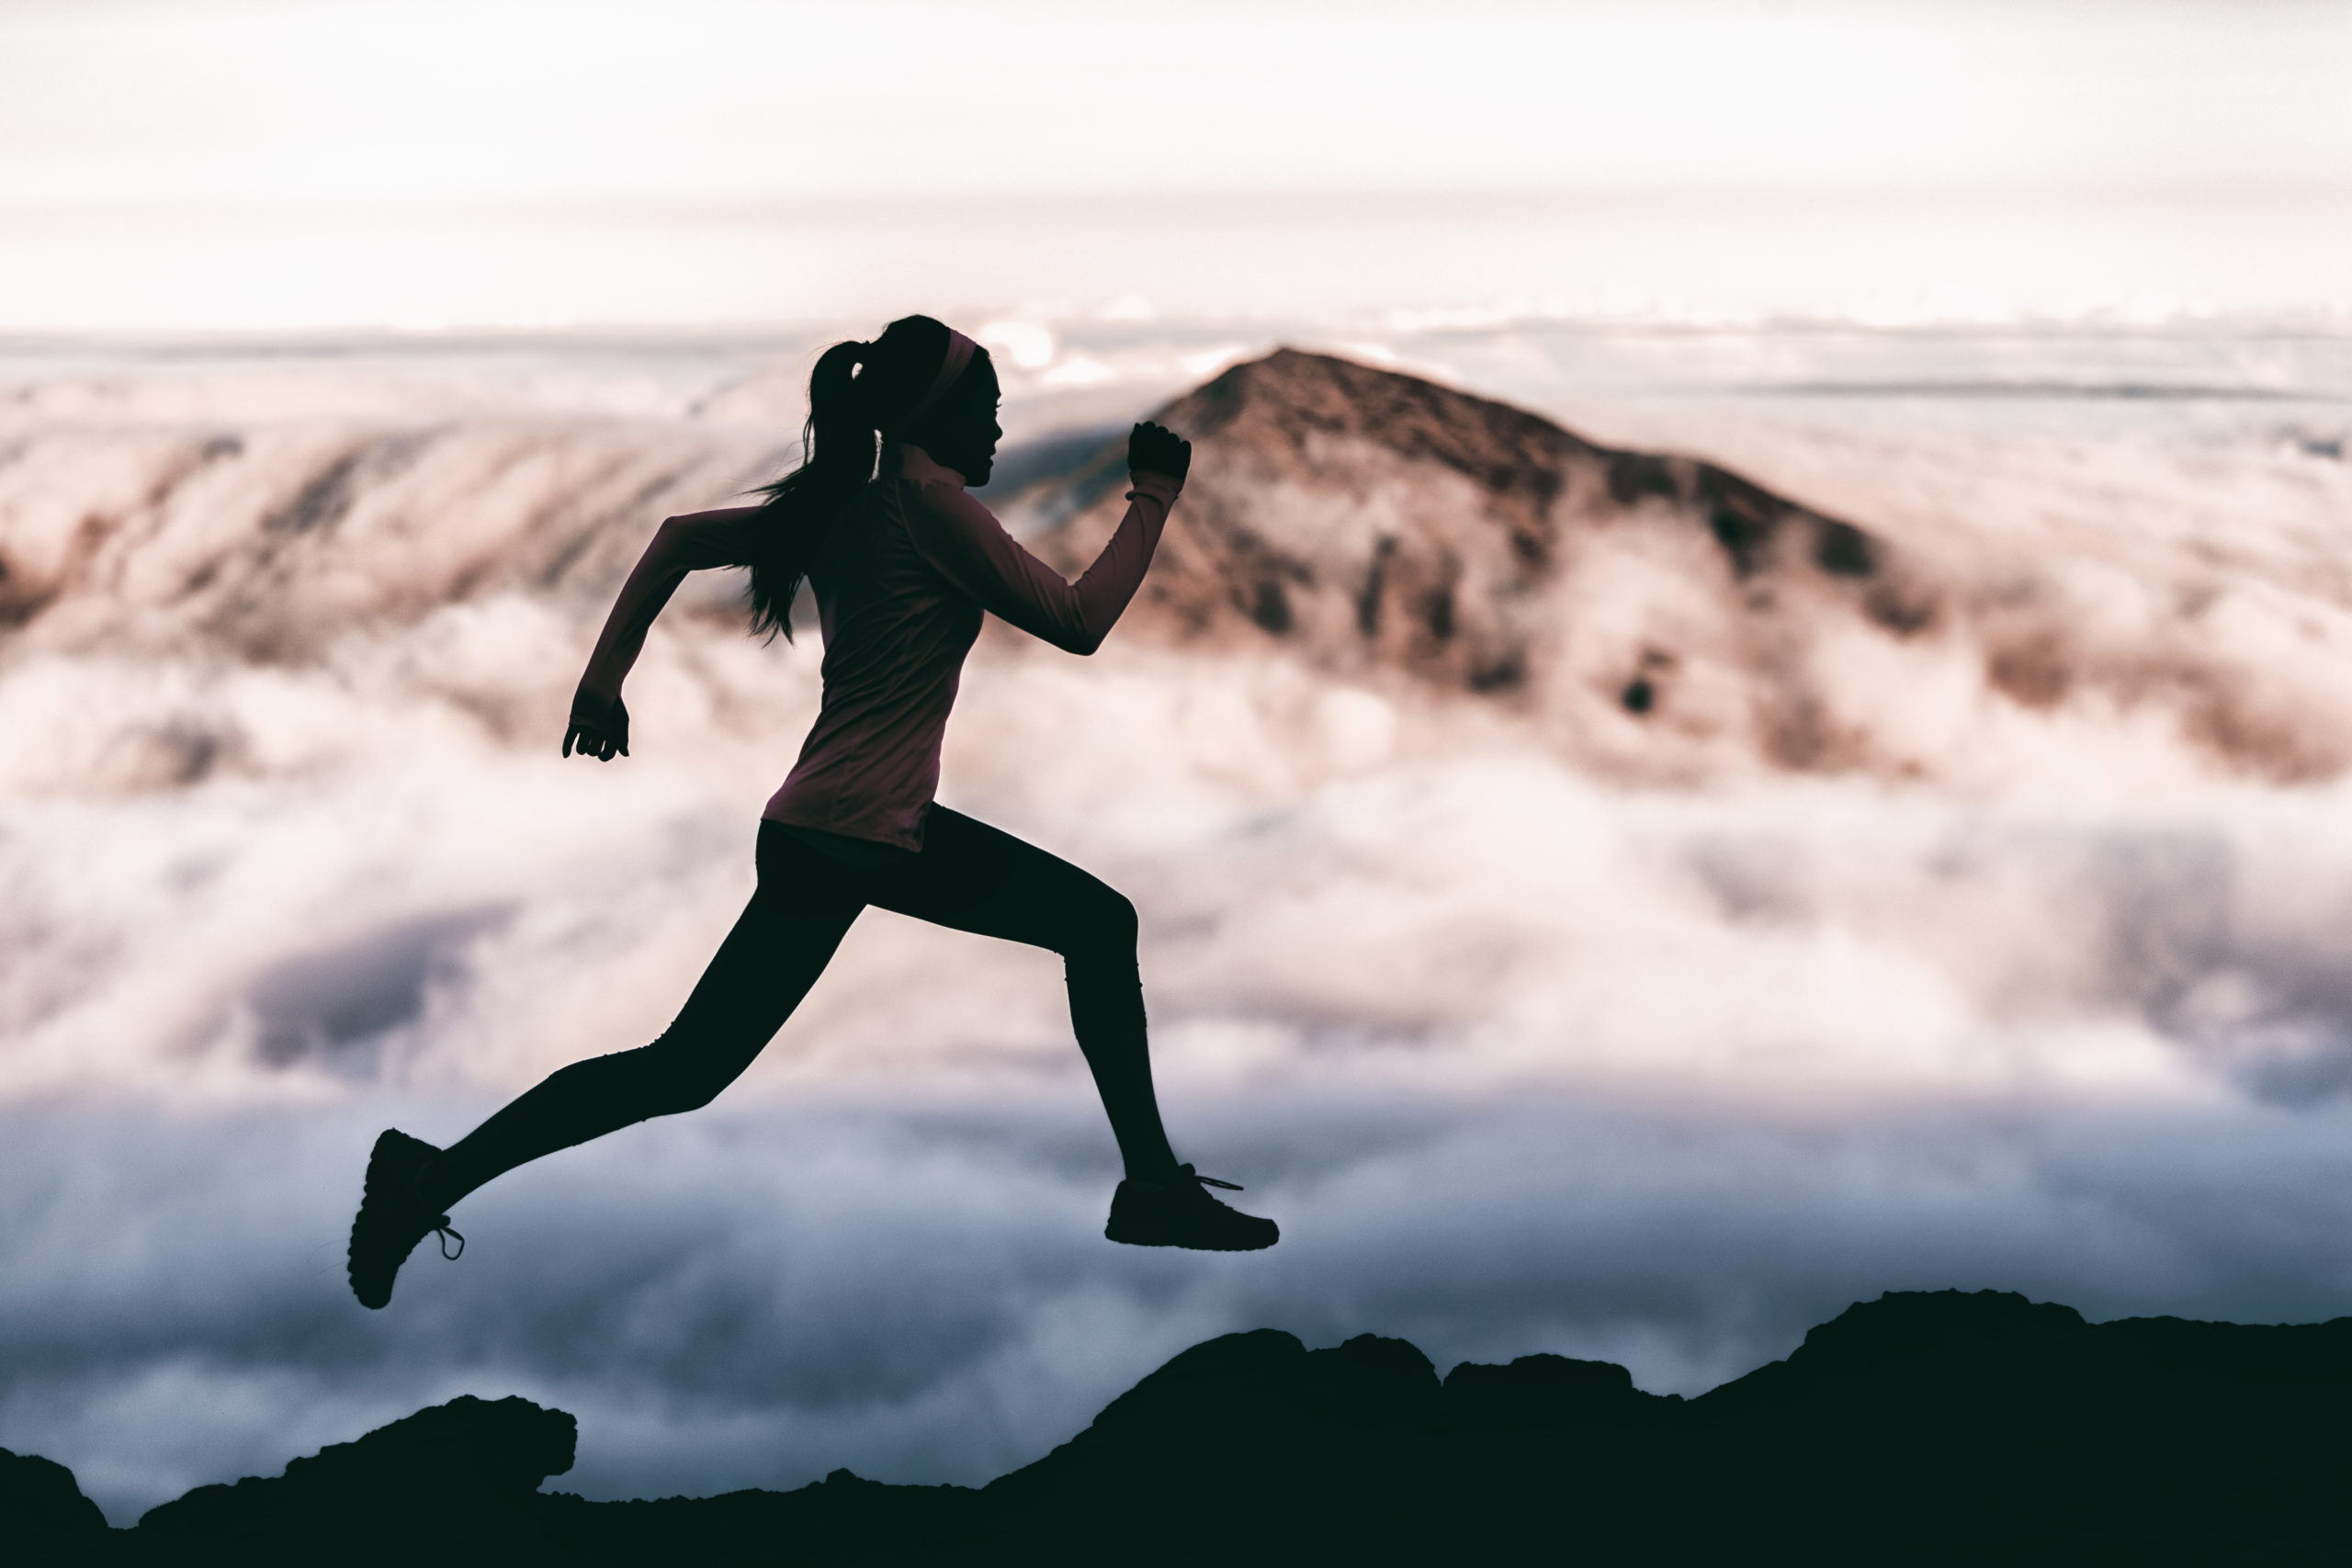 A woman runs at peak performance through the mountain tops.